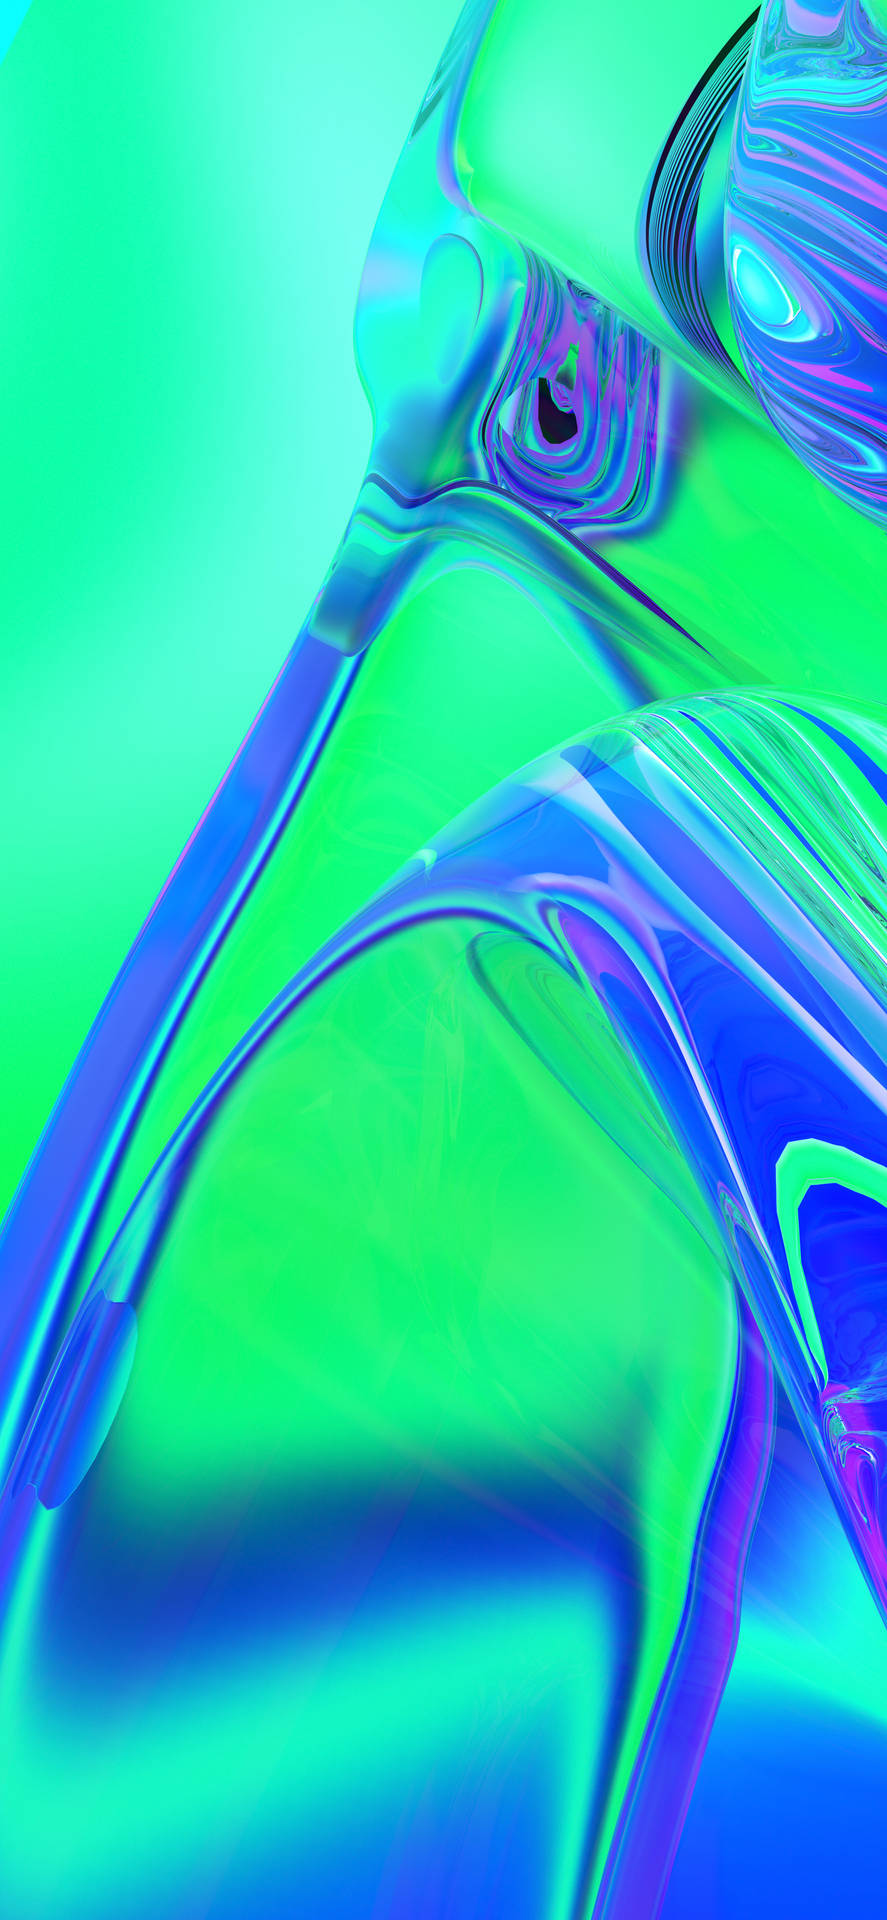 Close-up Green Liquid Surface Mobile 3d Wallpaper